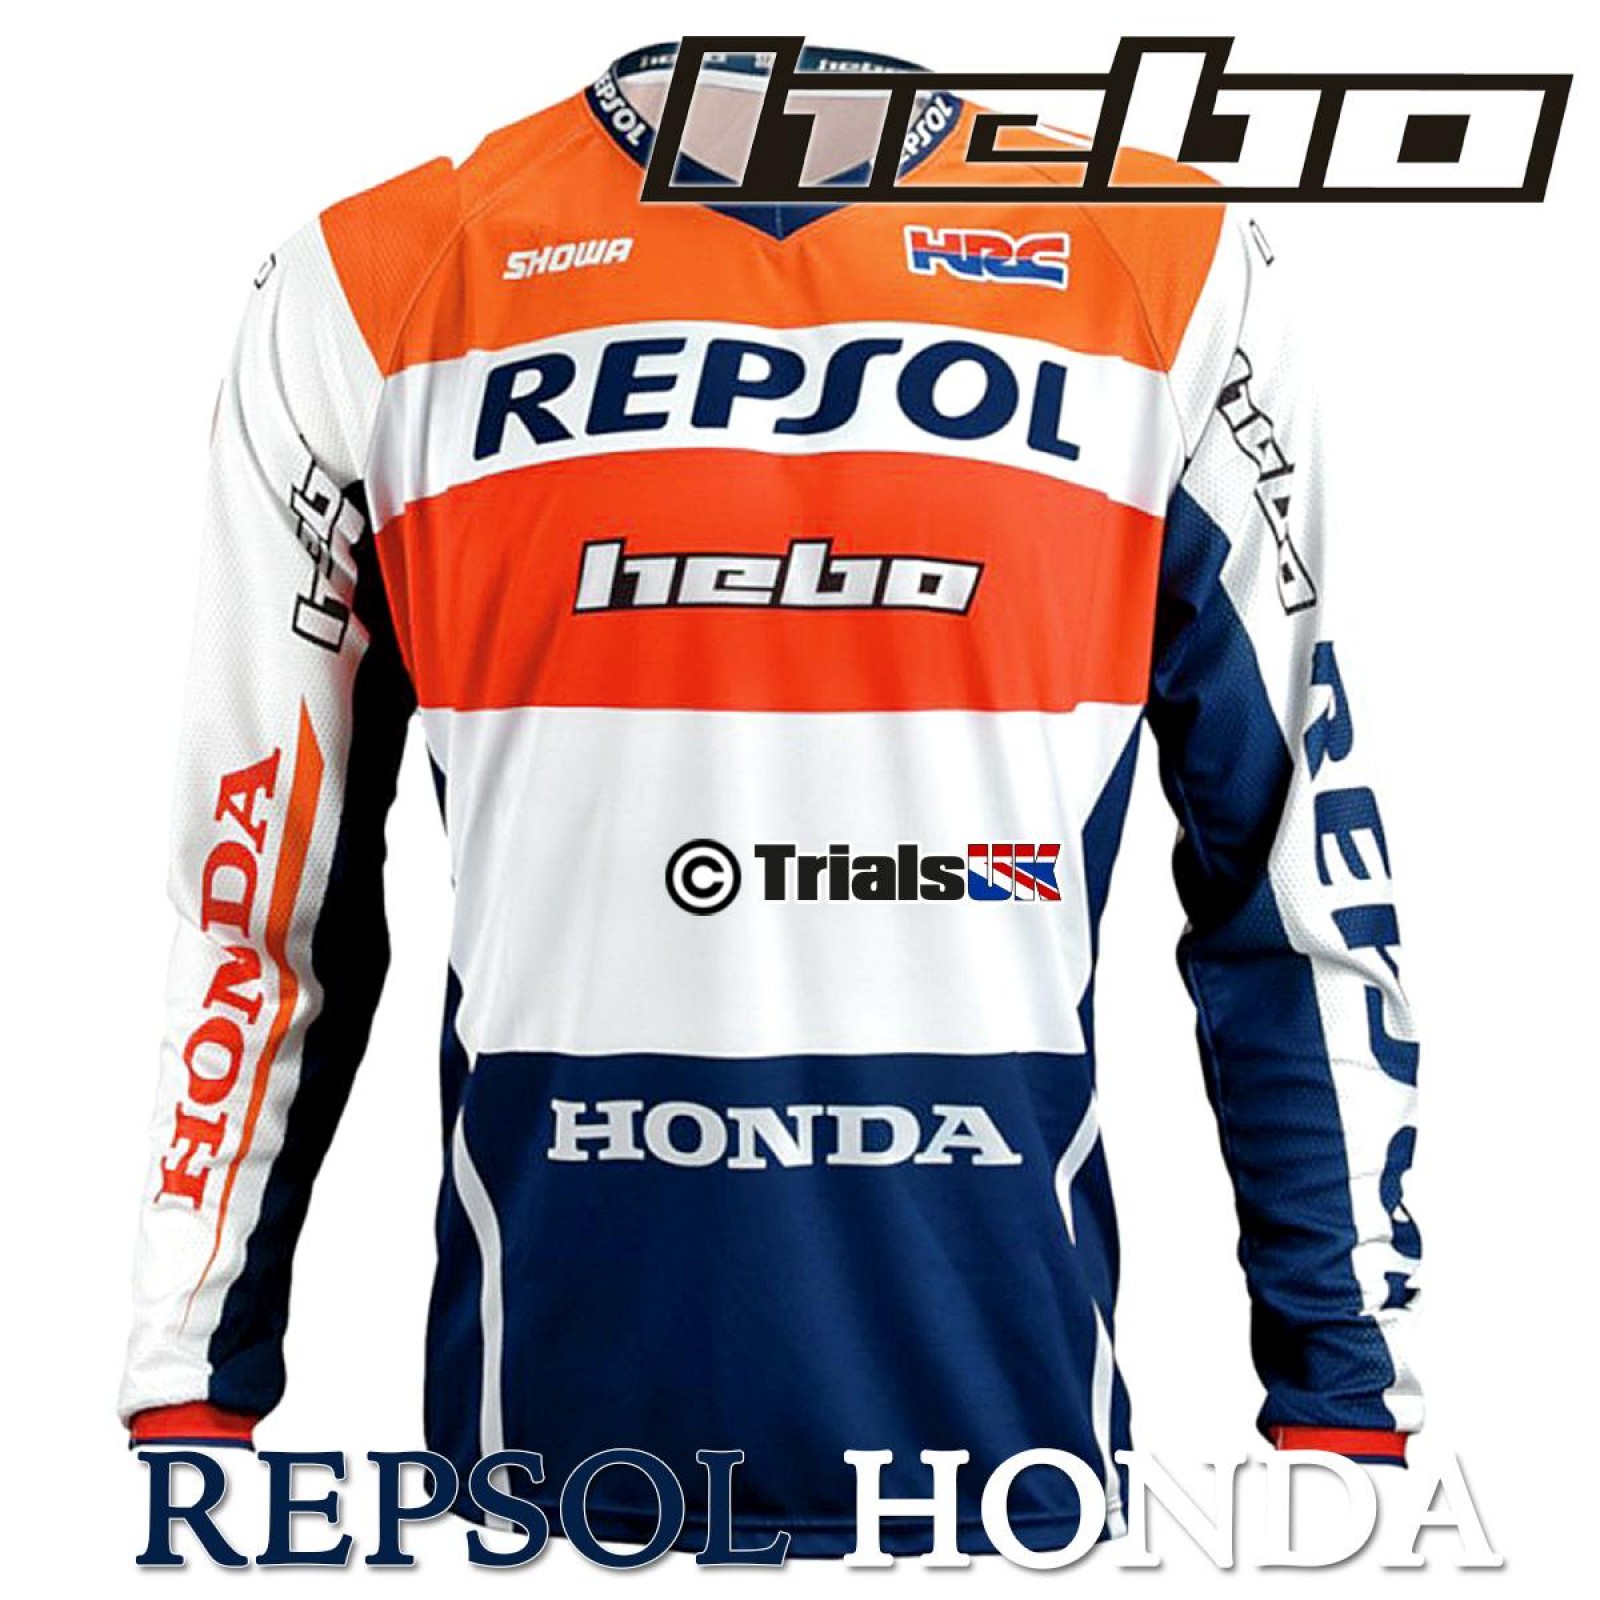 Hebo Official Team Repsol Montesa Trials Motorcycle Motor Bike Shirt Jersey 